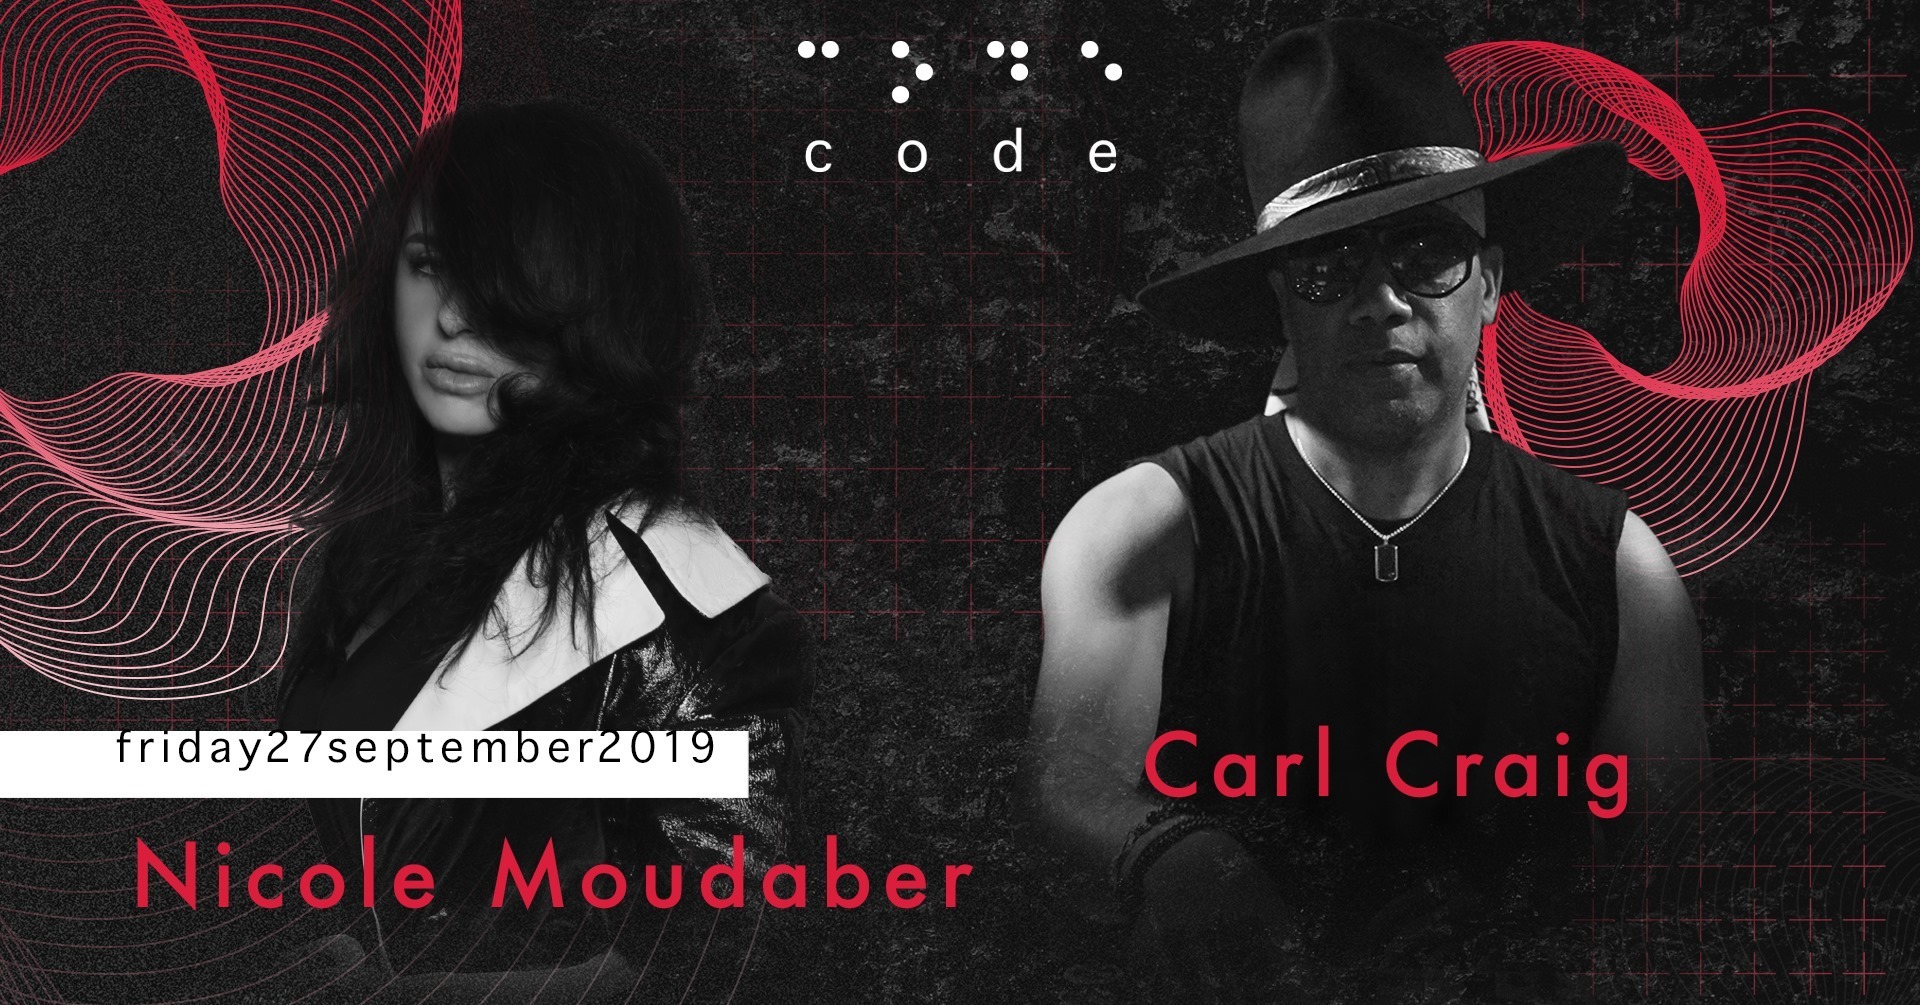 Code DXB – Nicole Moudaber, Carl Craig - Coming Soon in UAE